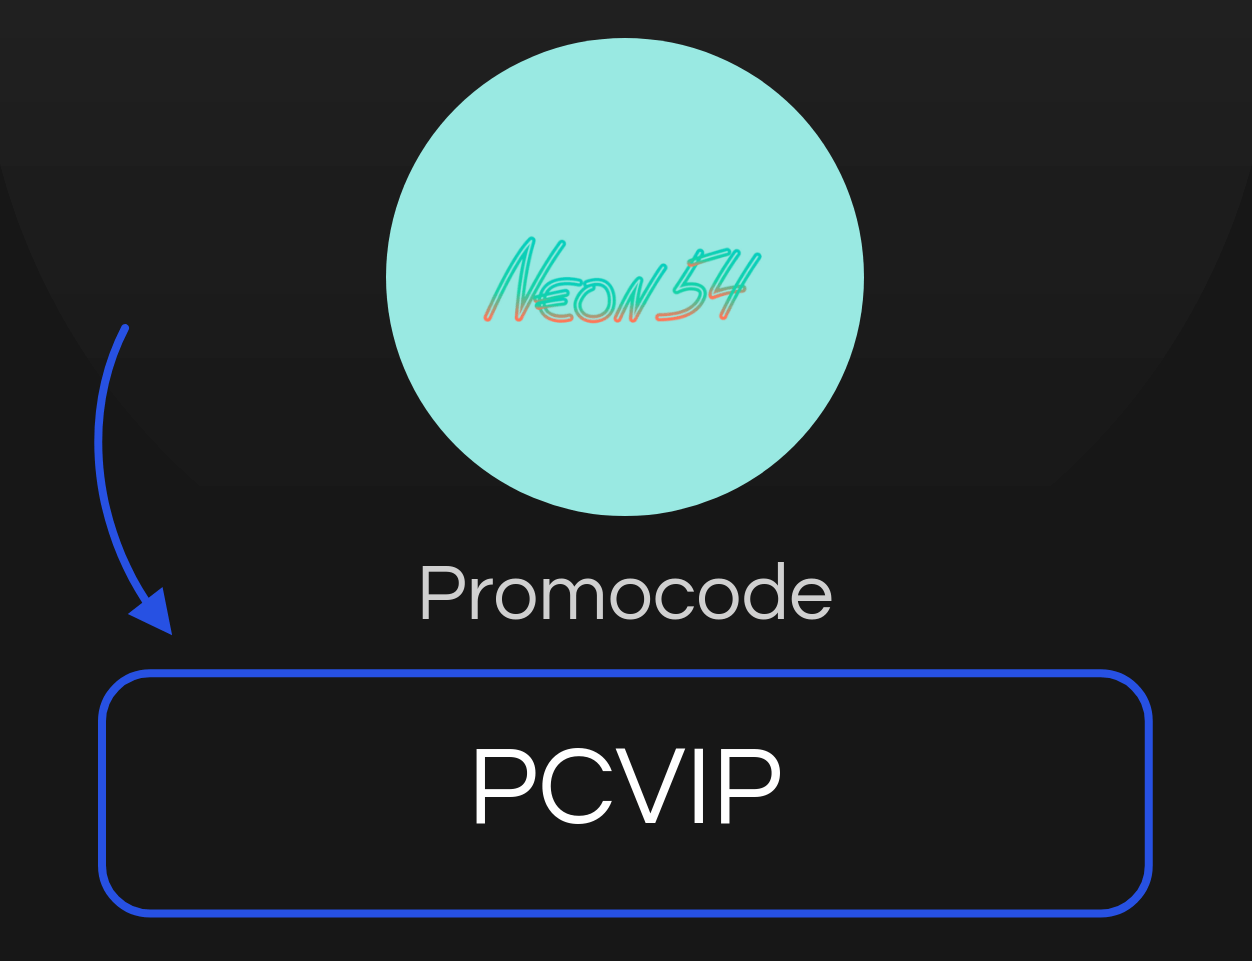 Neon54 Promocode